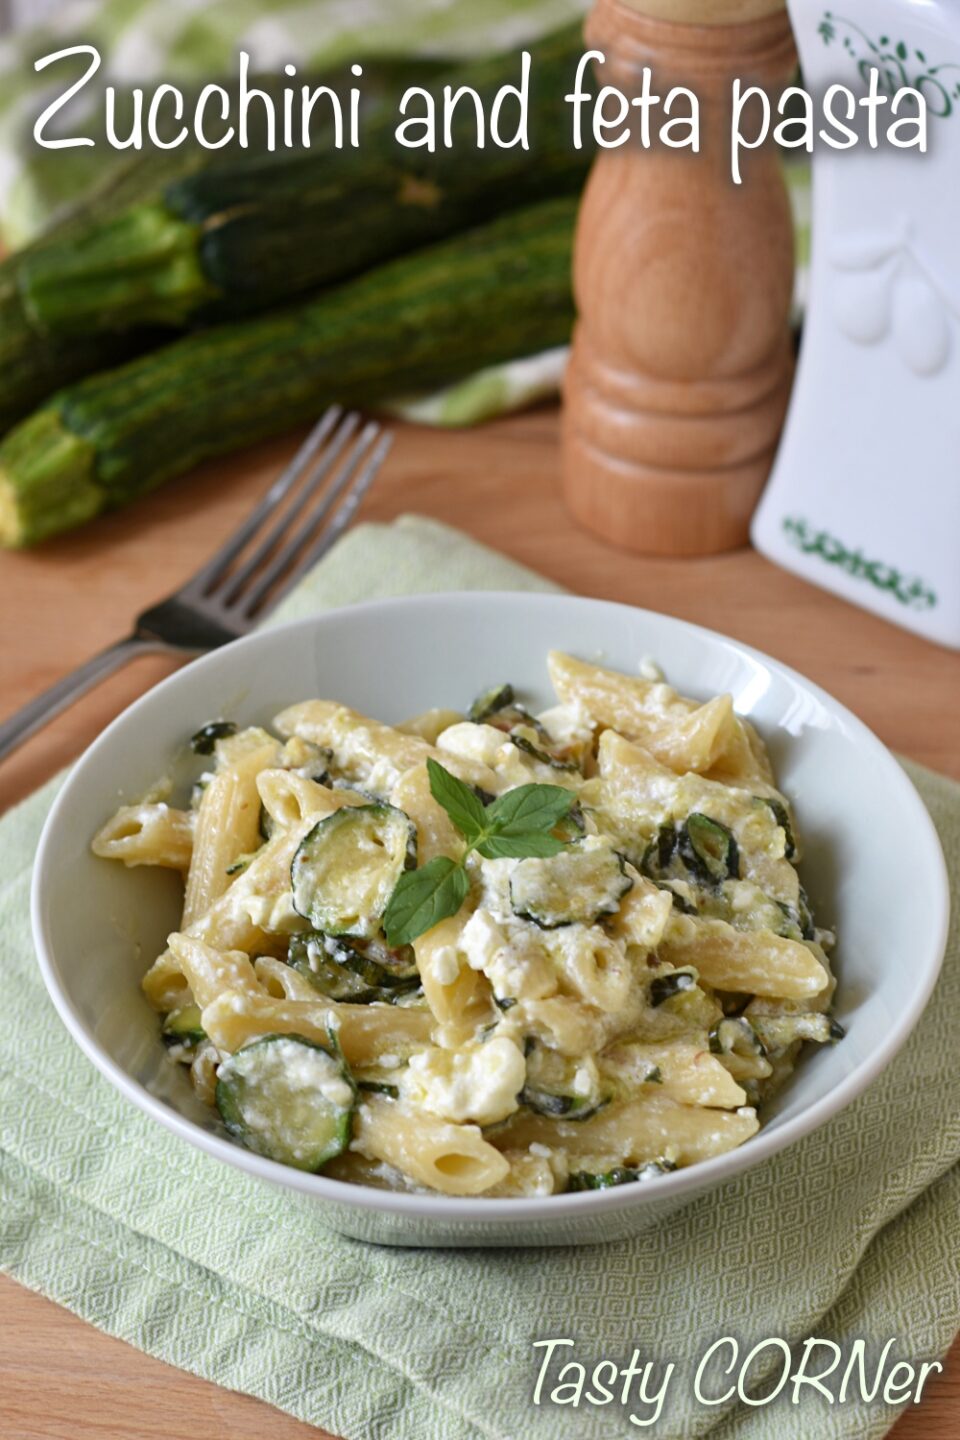 en_v_ zucchini and feta pasta recipe easy 20 minutes recipe creamy and tasty pasta by tasty corner